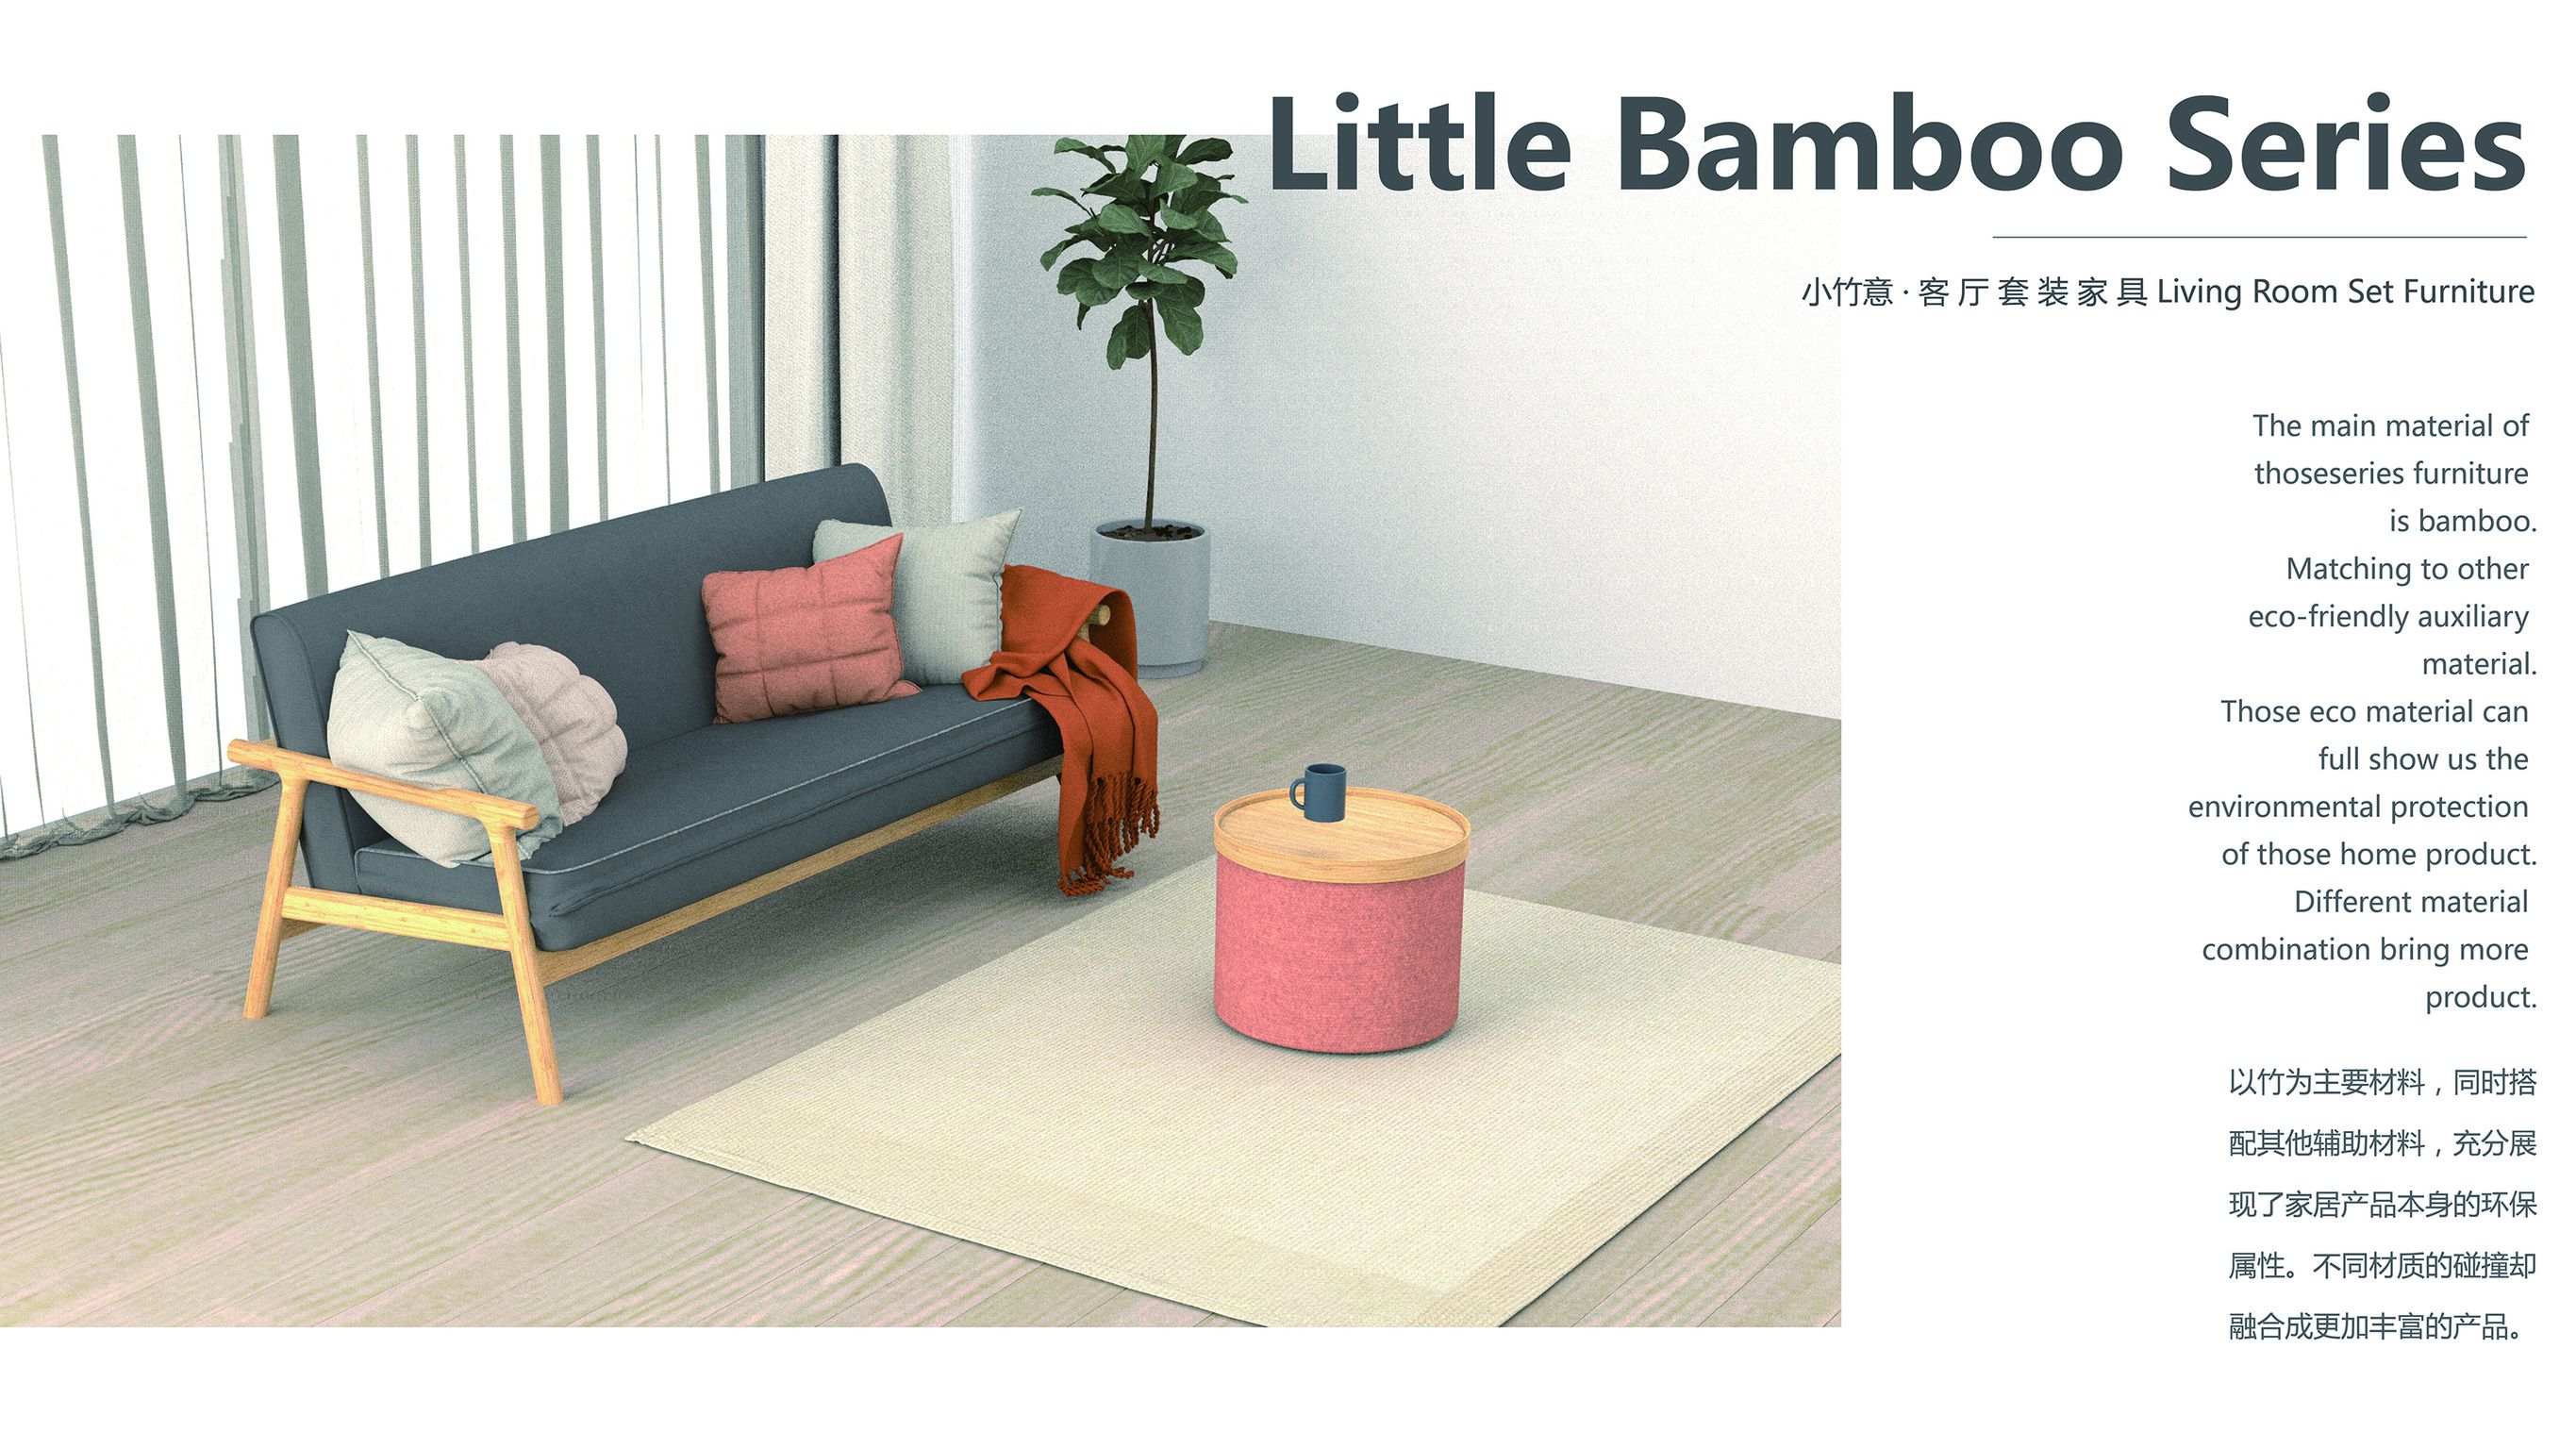 Little Bamboo Series If World Design Guide